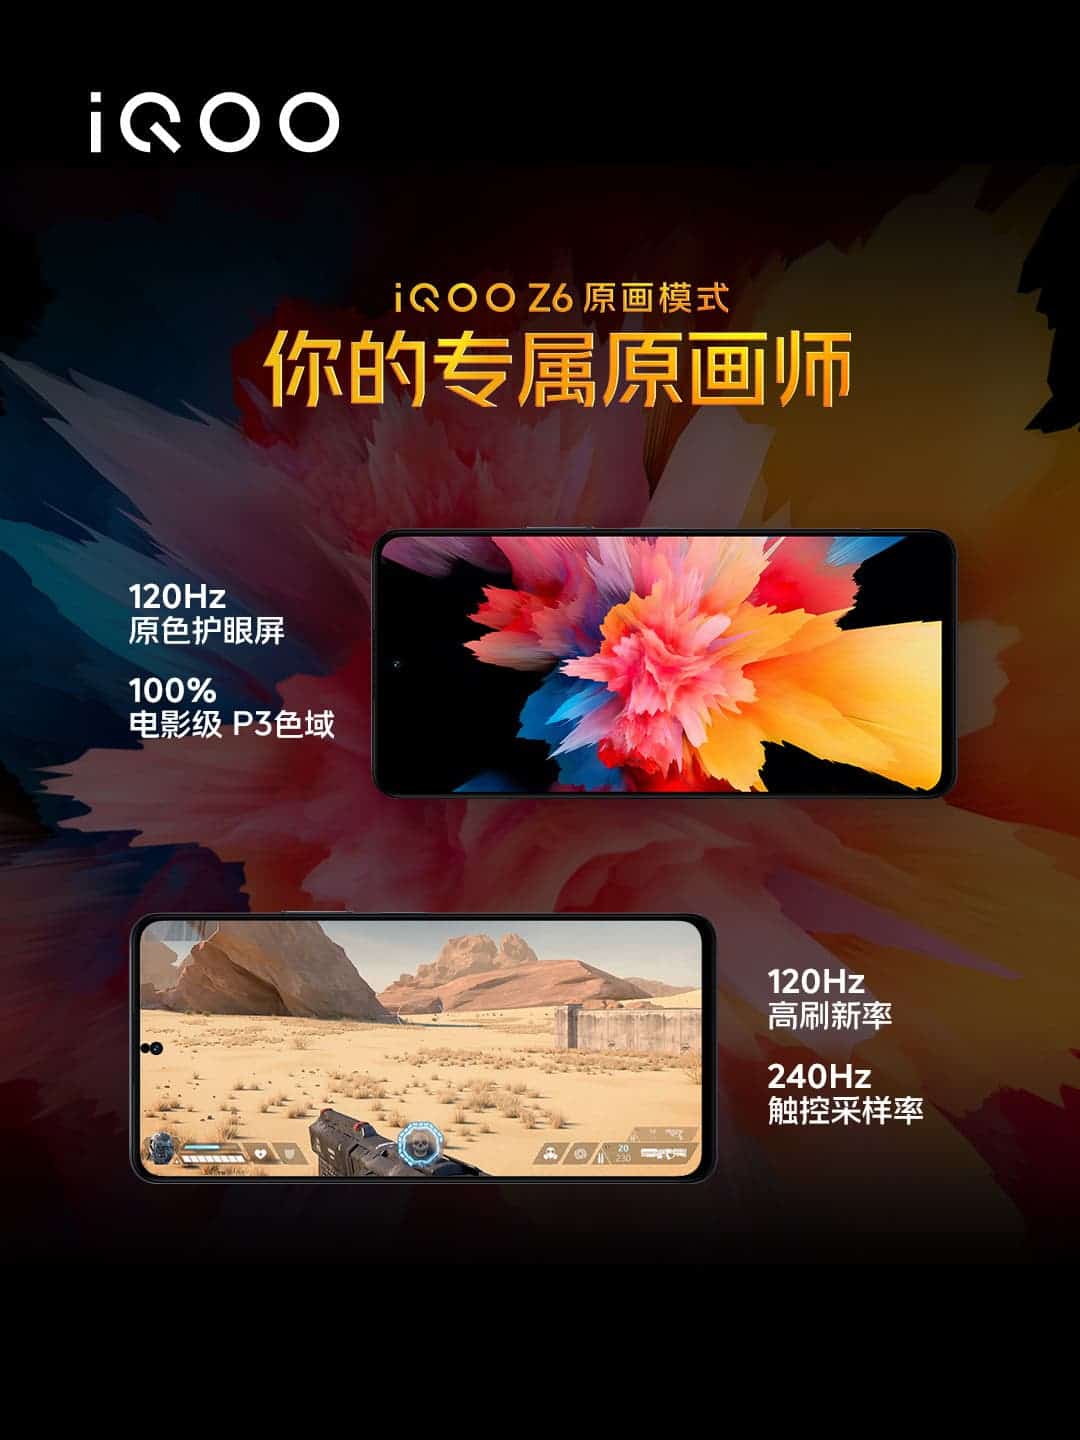 iQOO Z6 screen